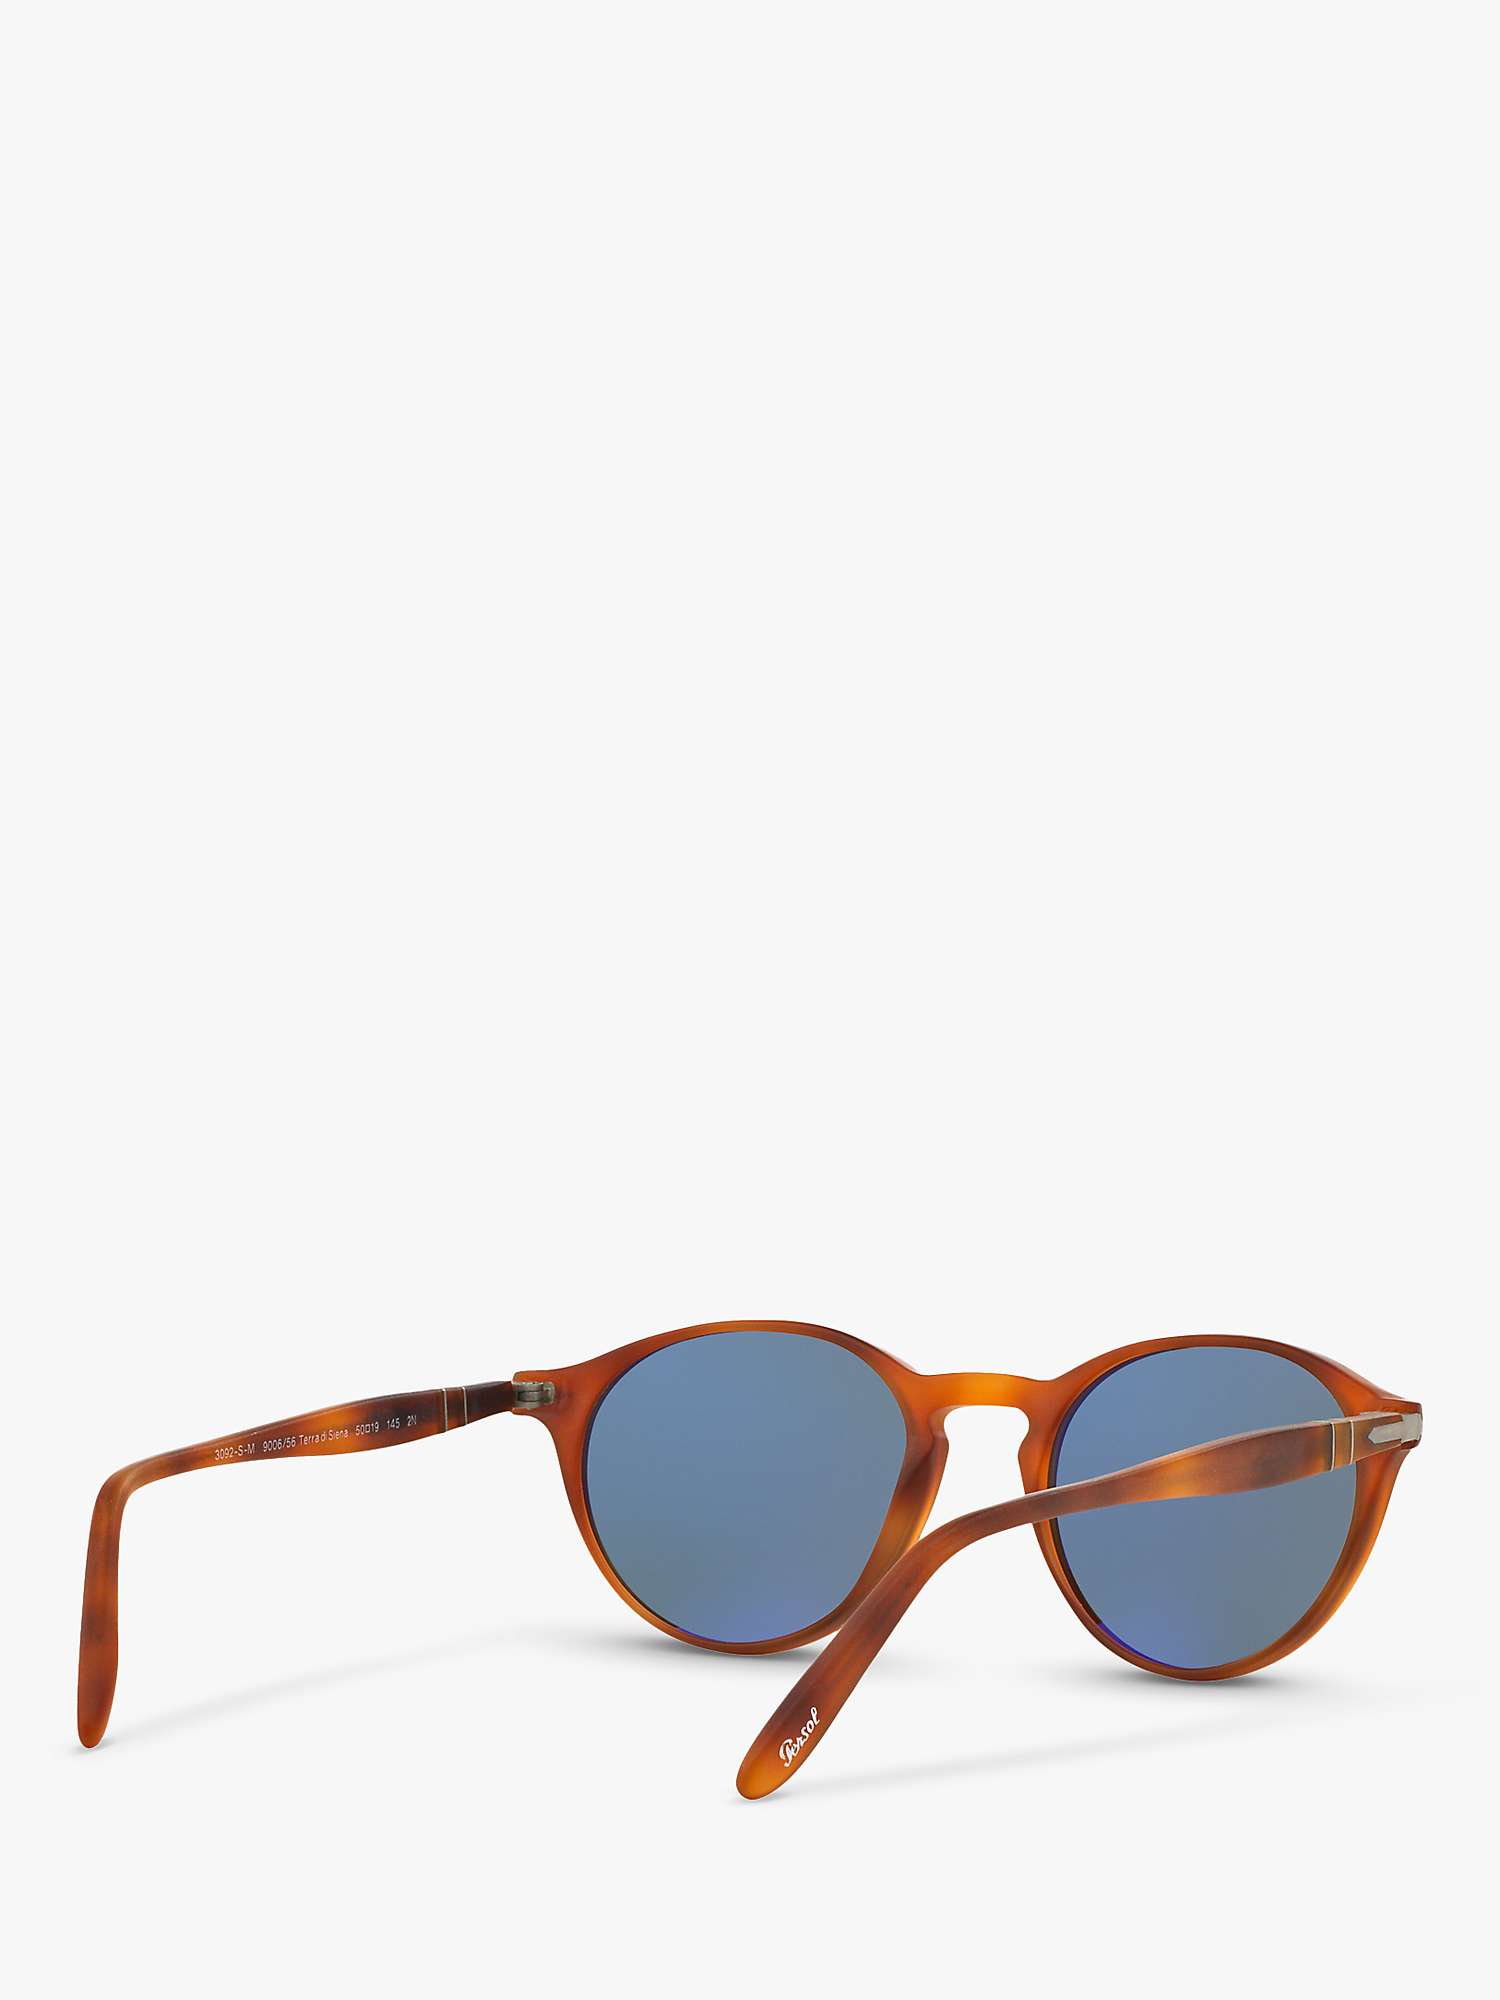 Buy Persol PO3092SM Men's Oval Sunglasses, Terra di Siena/Blue Online at johnlewis.com